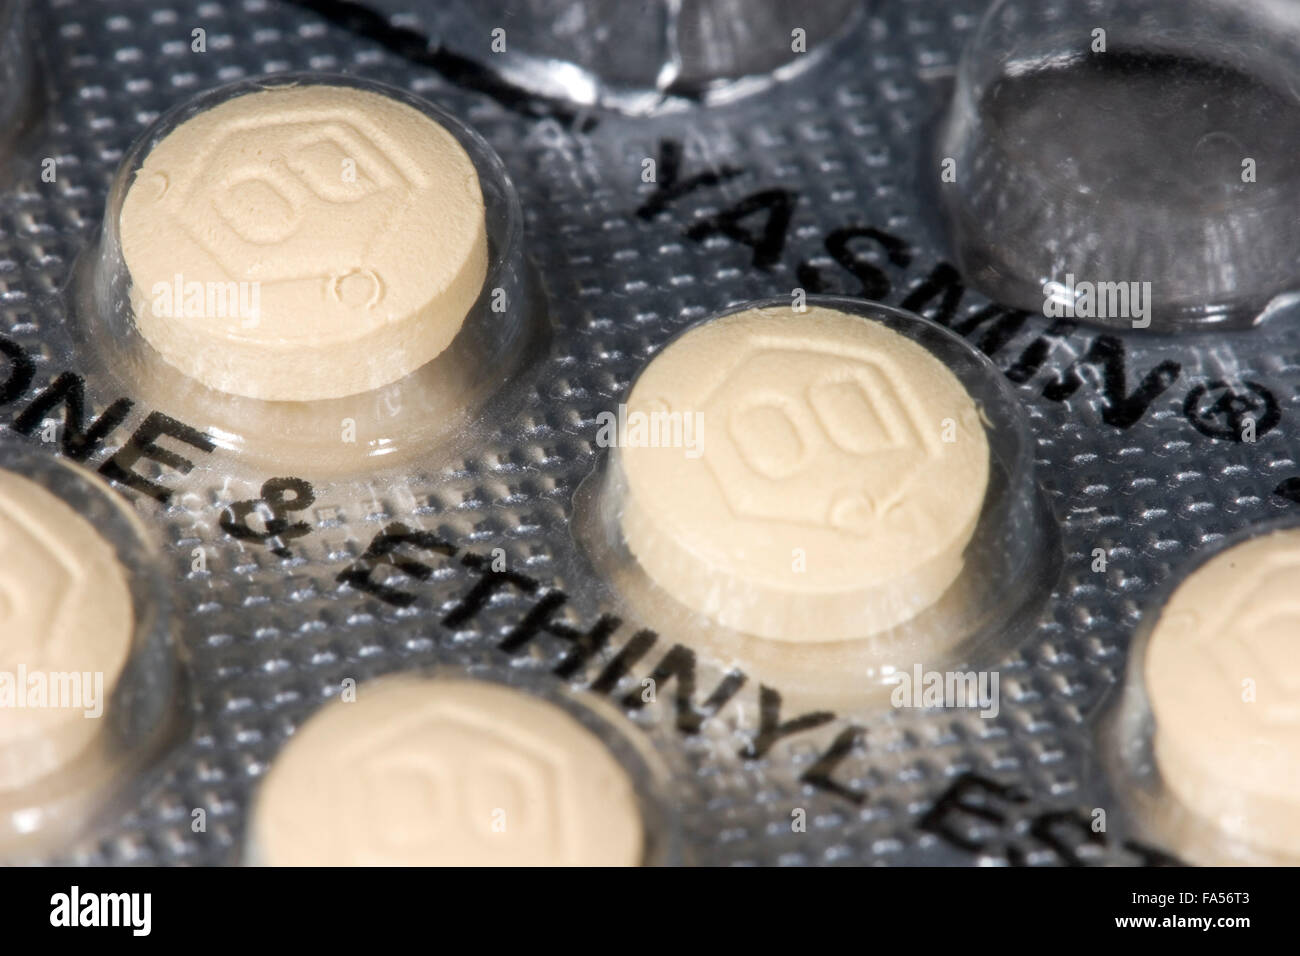 La pilule contraceptive Yasmin. La drospirénone et éthinylestradiol comprimés, 3.0MG. Banque D'Images